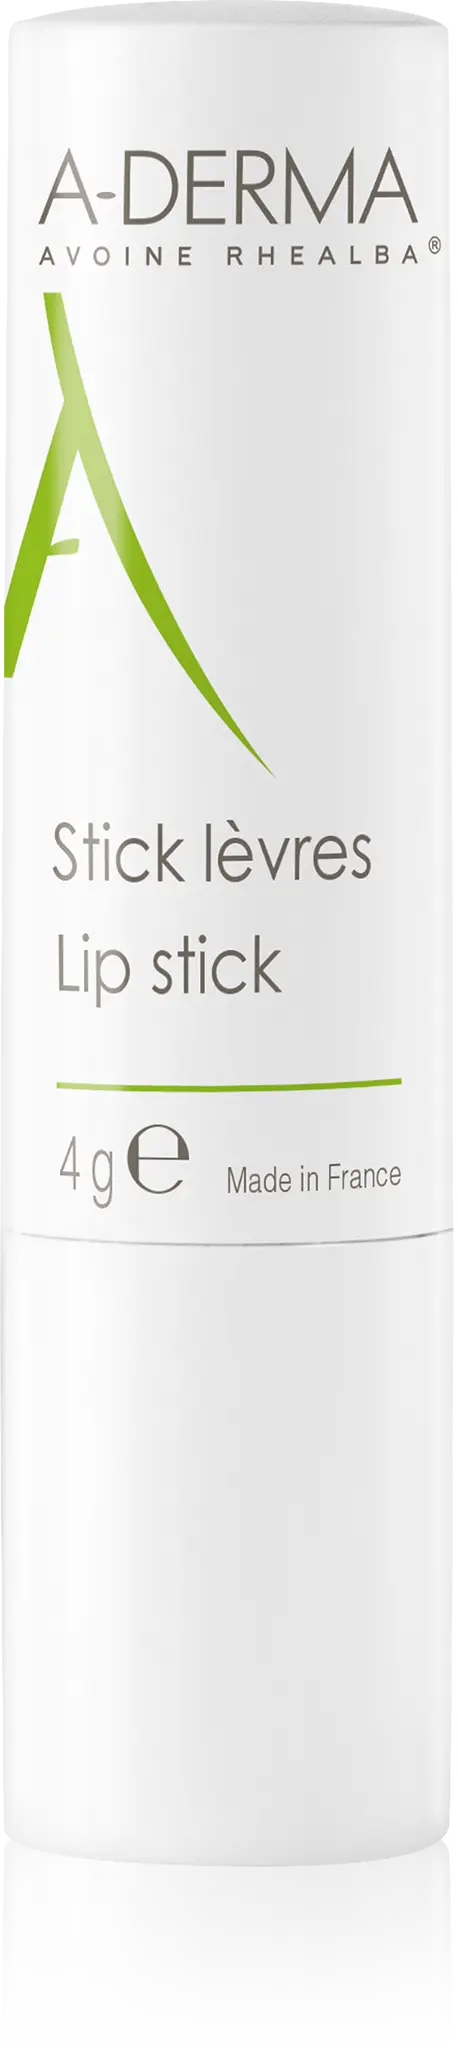 A-derma stick lèvres d'avoine rhealba tyčinka na rty 1x4 g